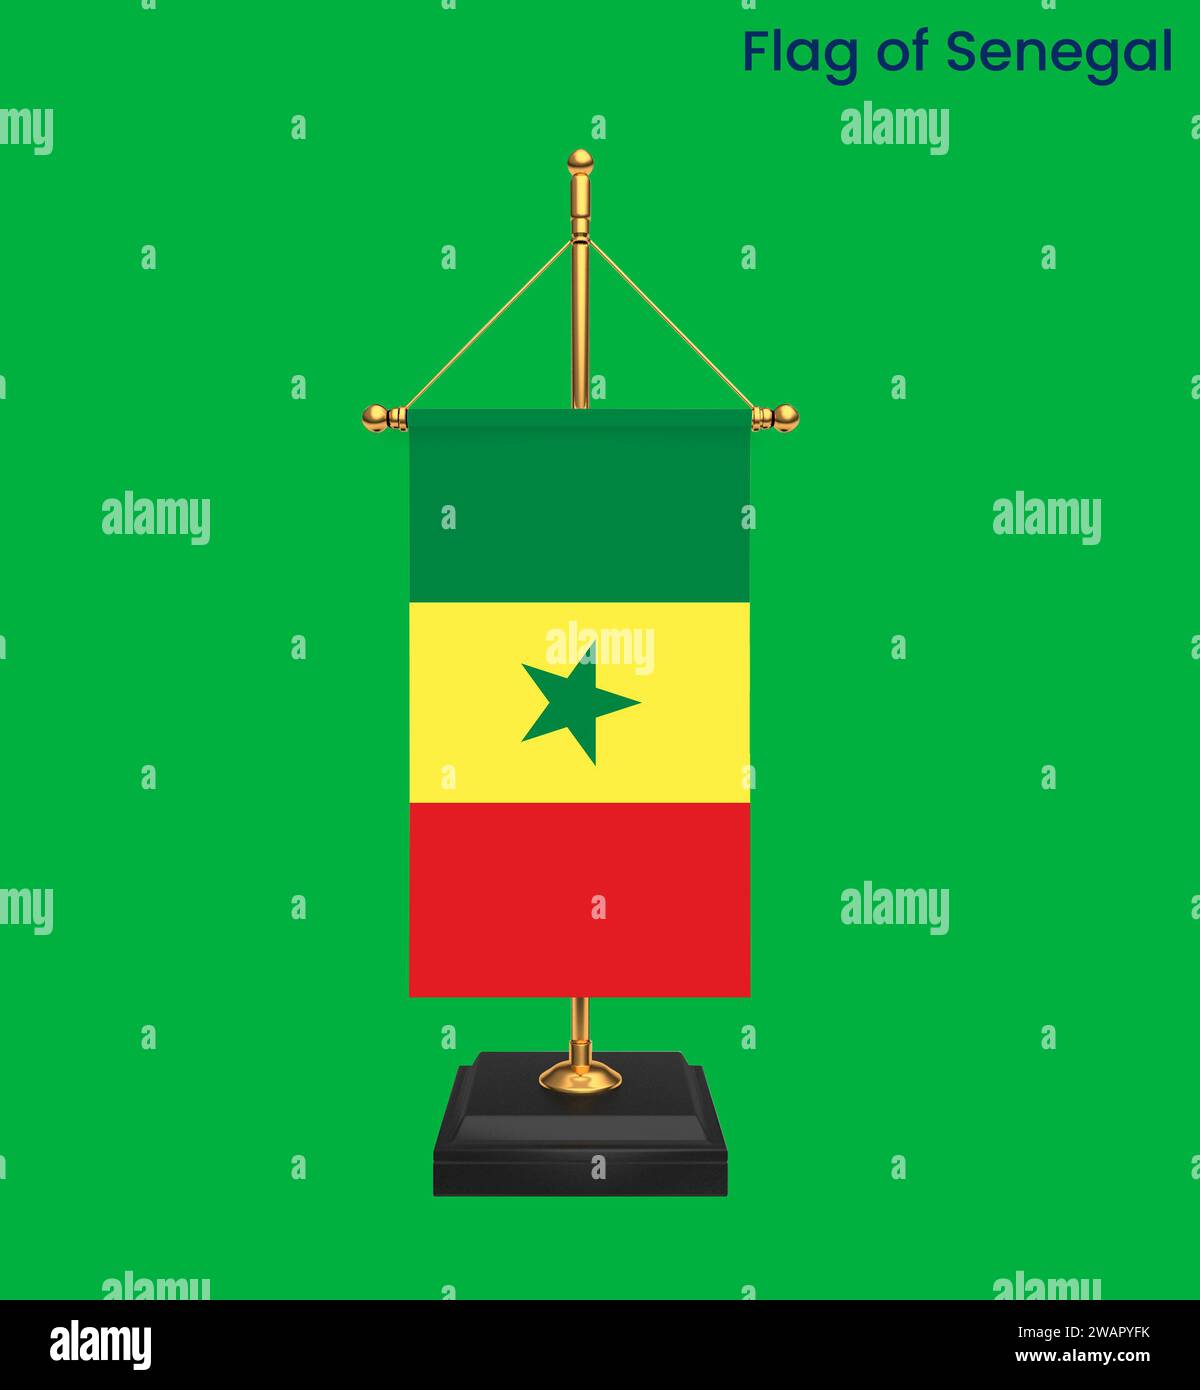 Detaillierte Flagge von Senegal. Nationale Senegalflagge. Afrika. 3D-Abbildung. Stockfoto